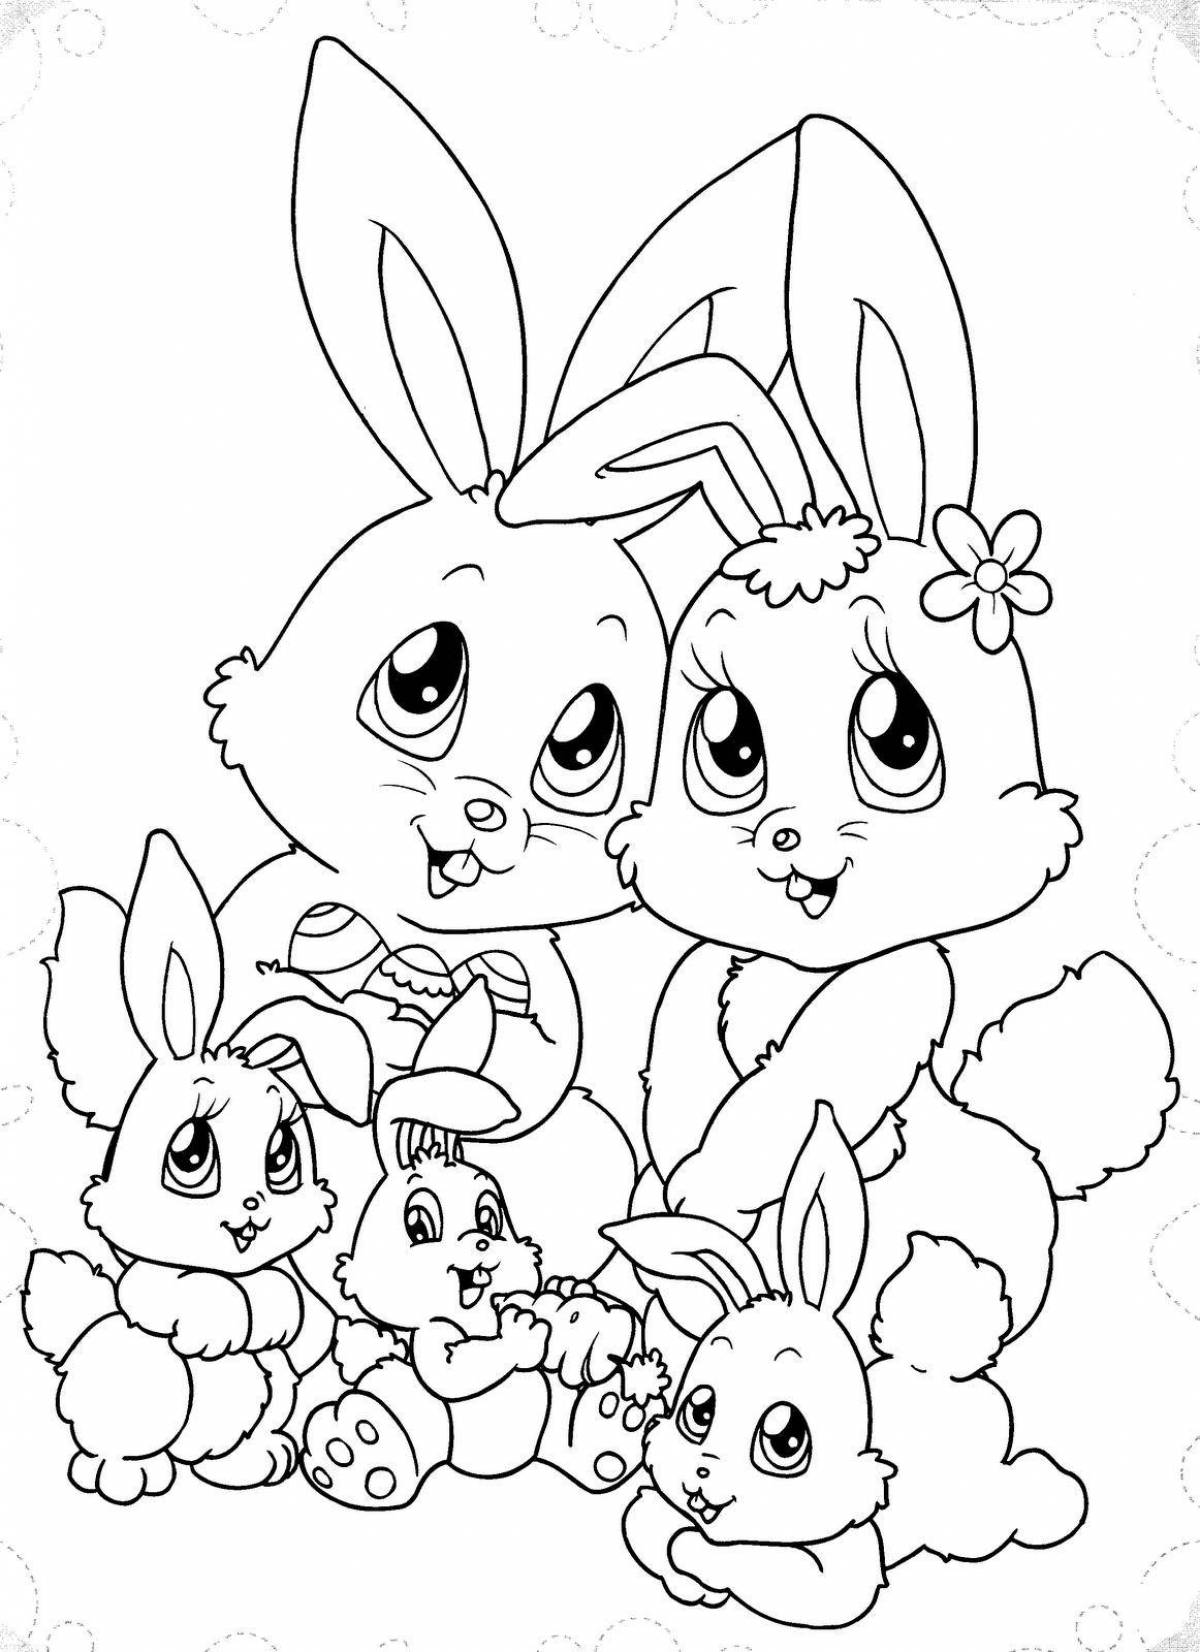 Bright hare family